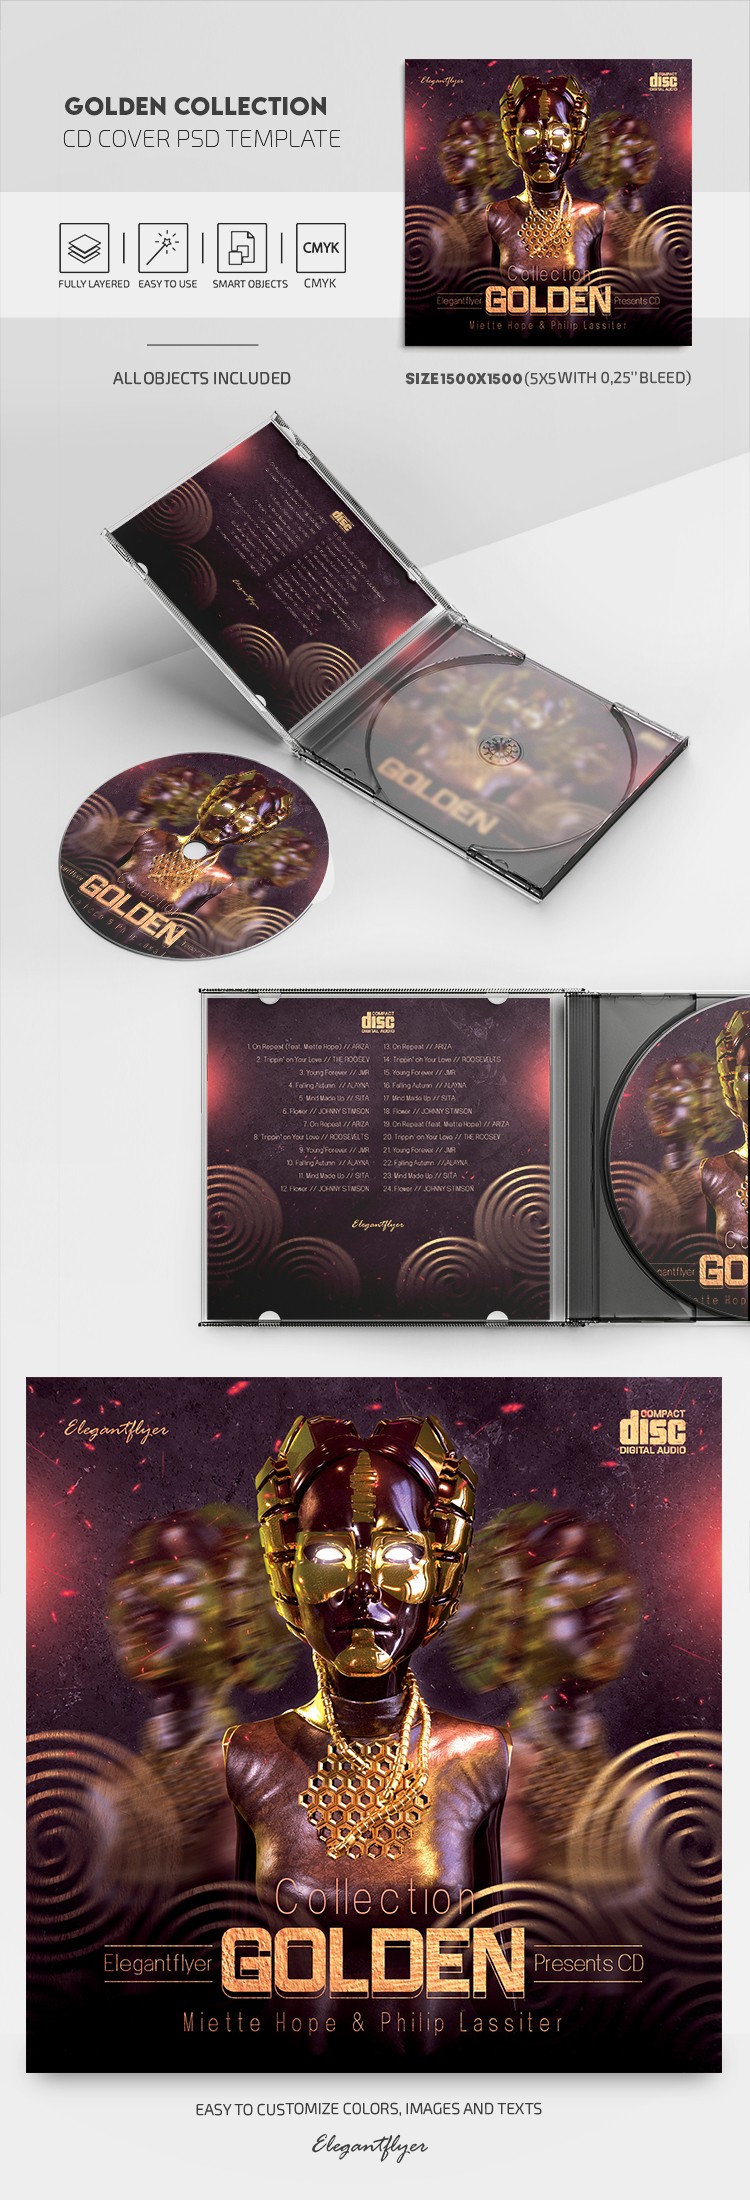 Golden Collection CD Cover by ElegantFlyer